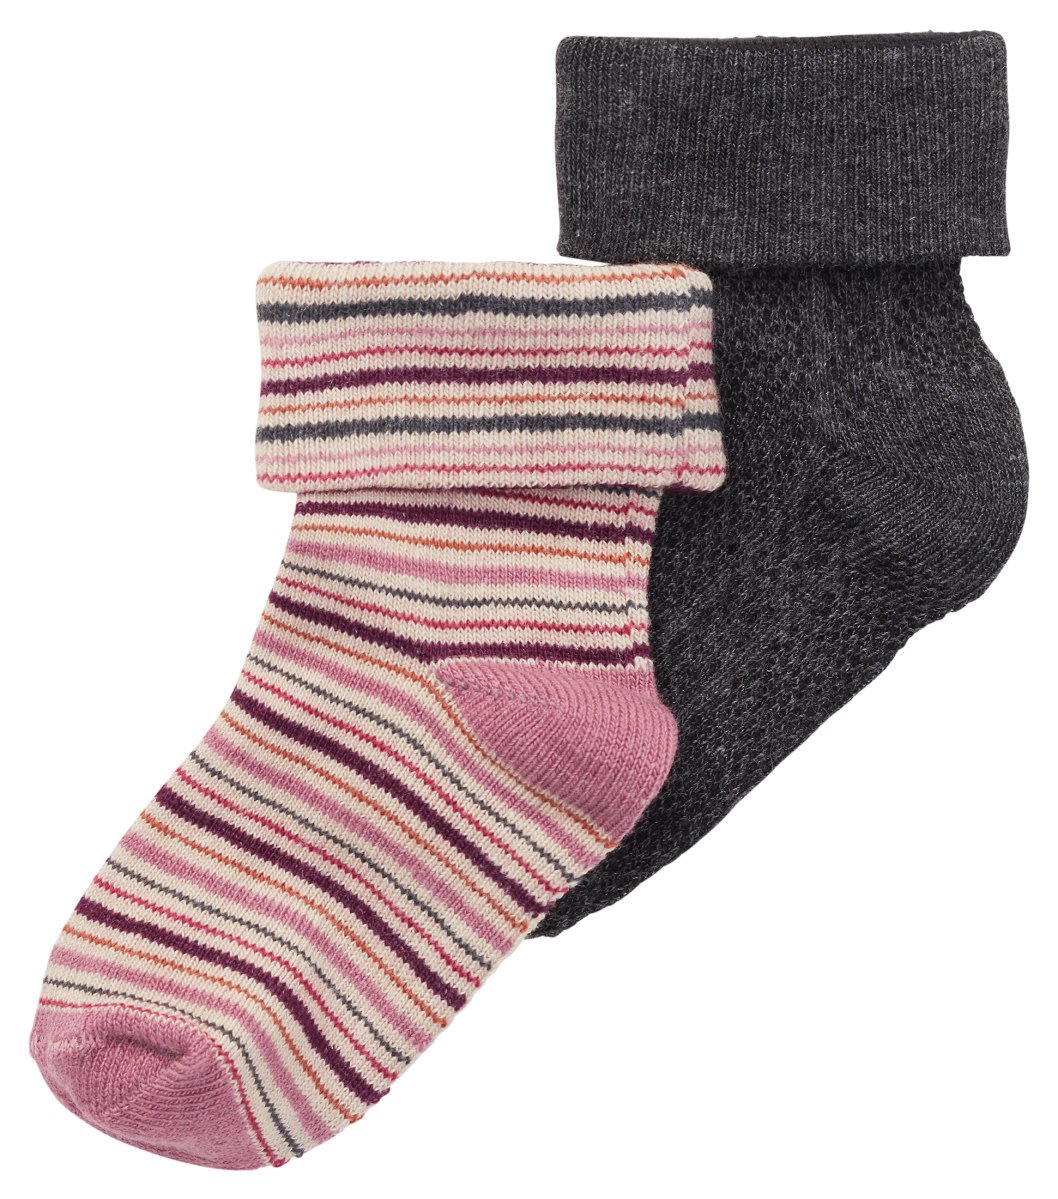 Sayville Socks - Set of 2  Pair